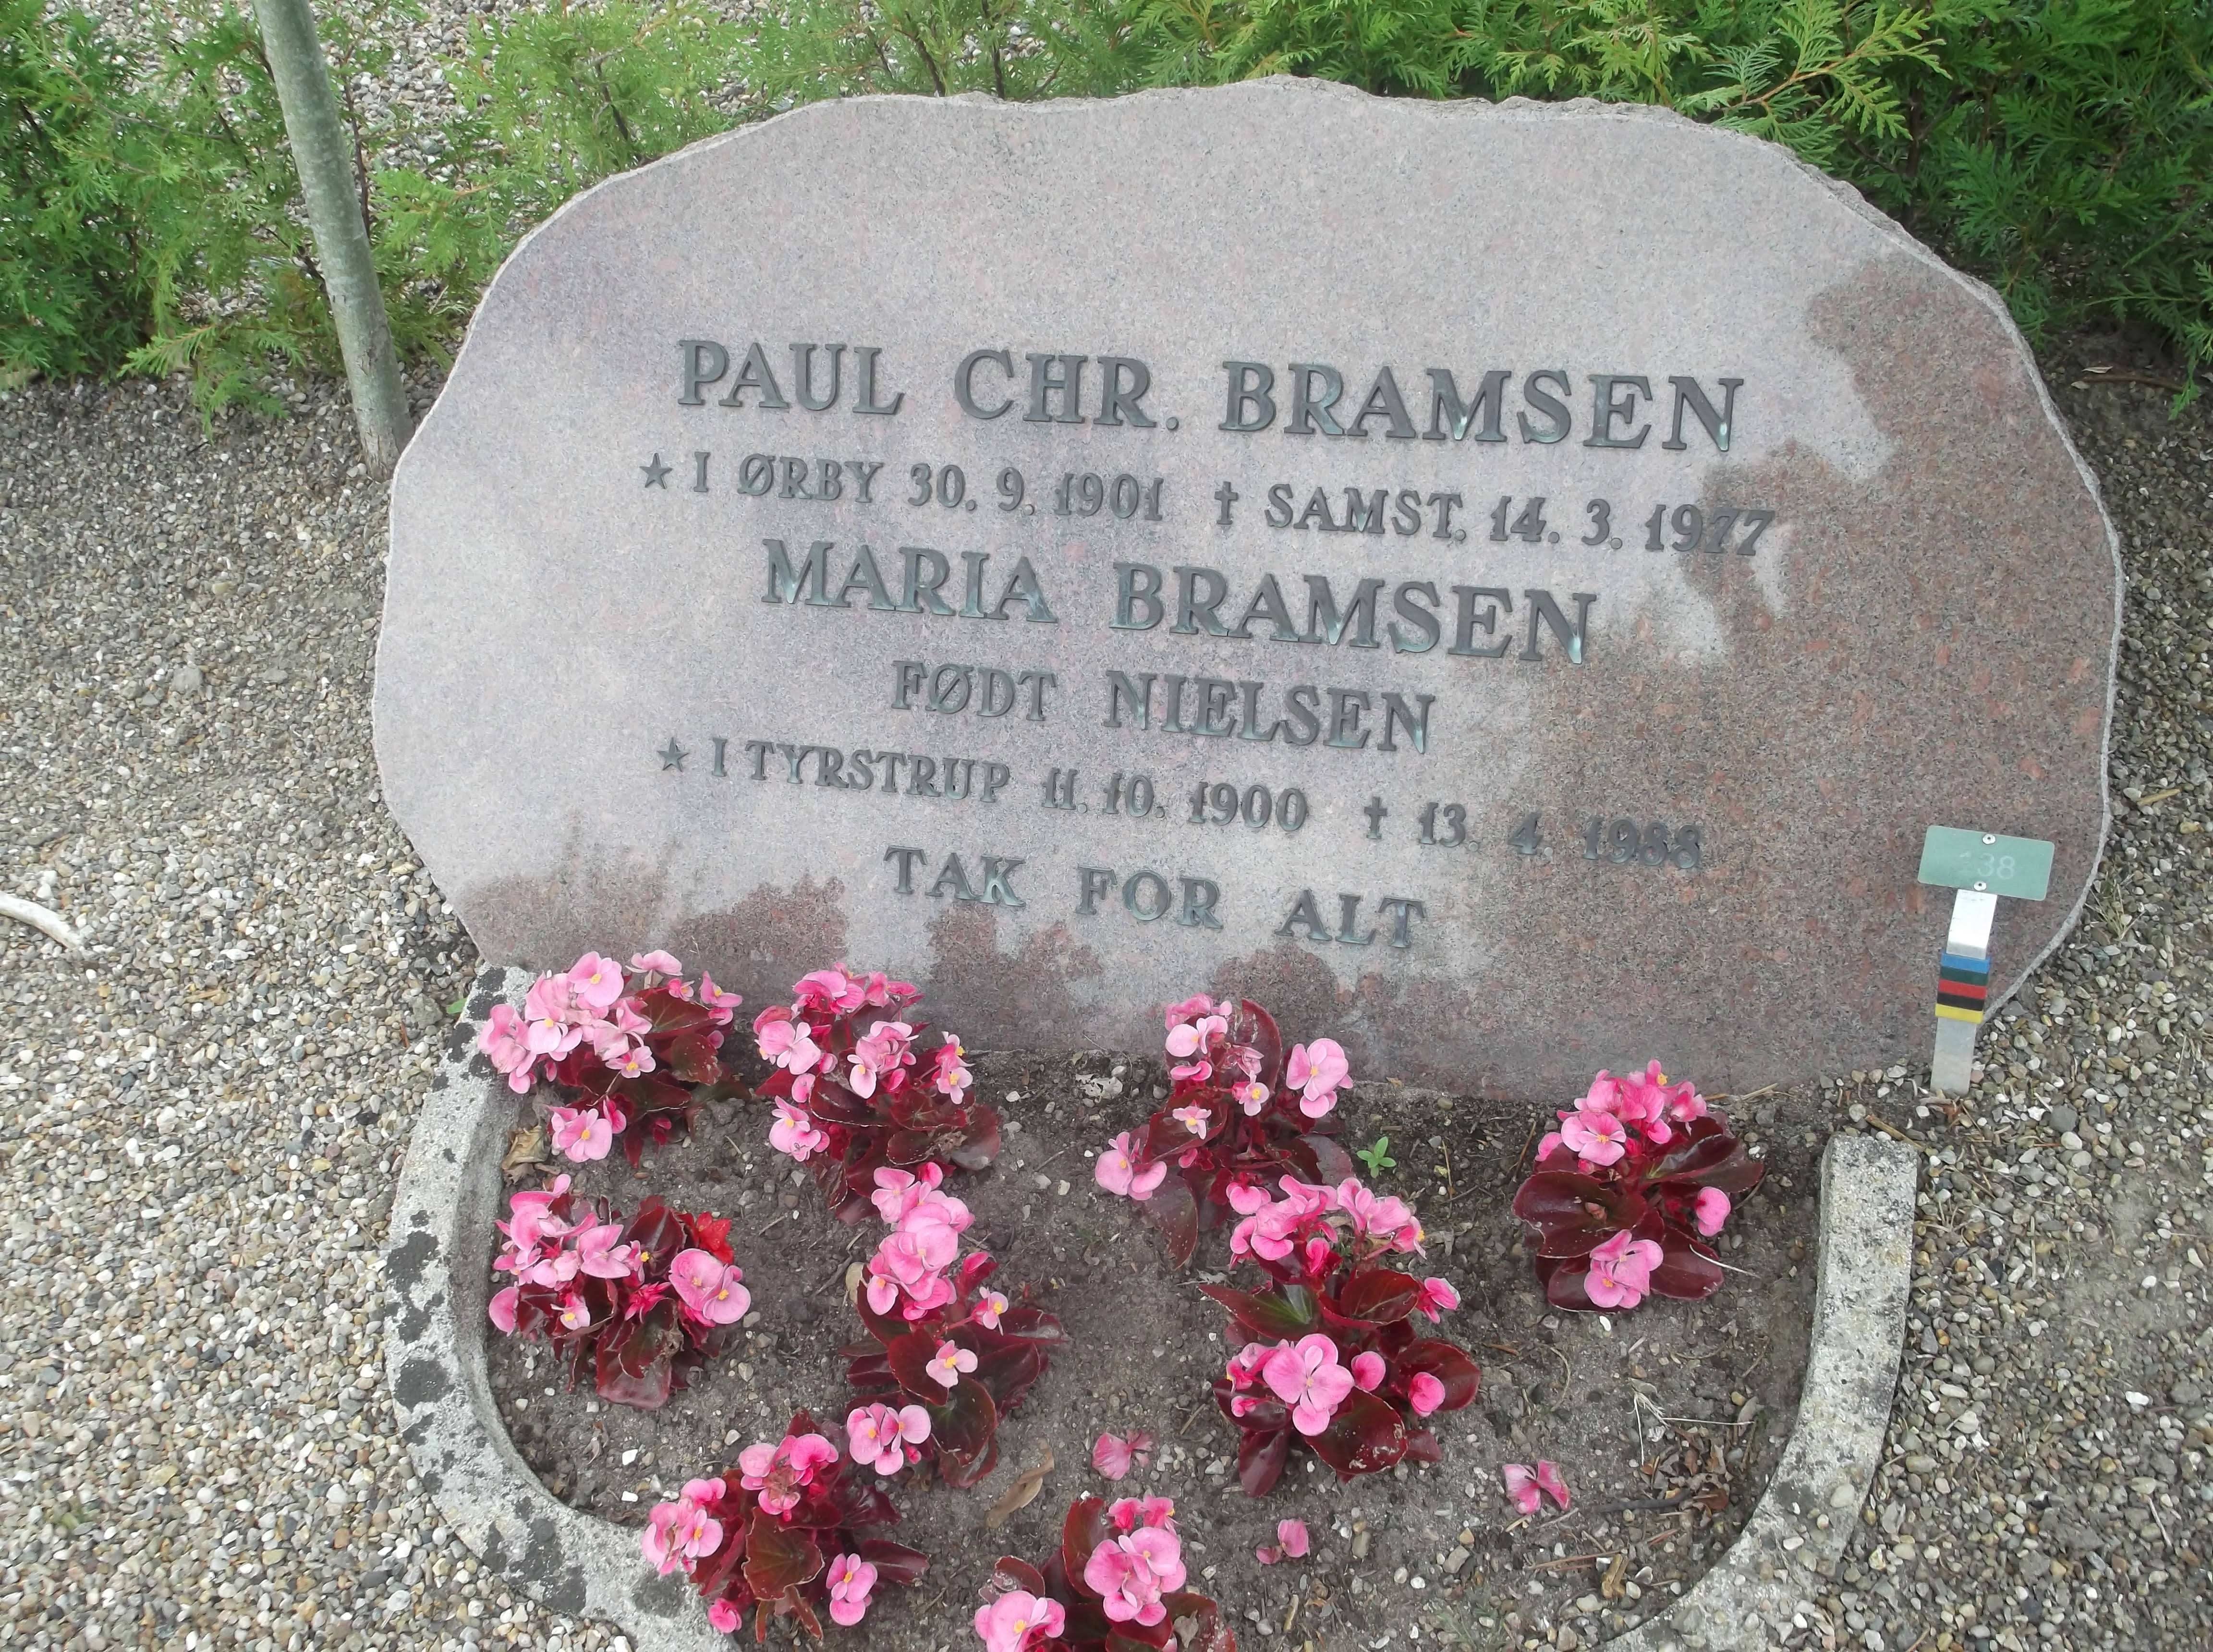 Poul Chr. Bramsen